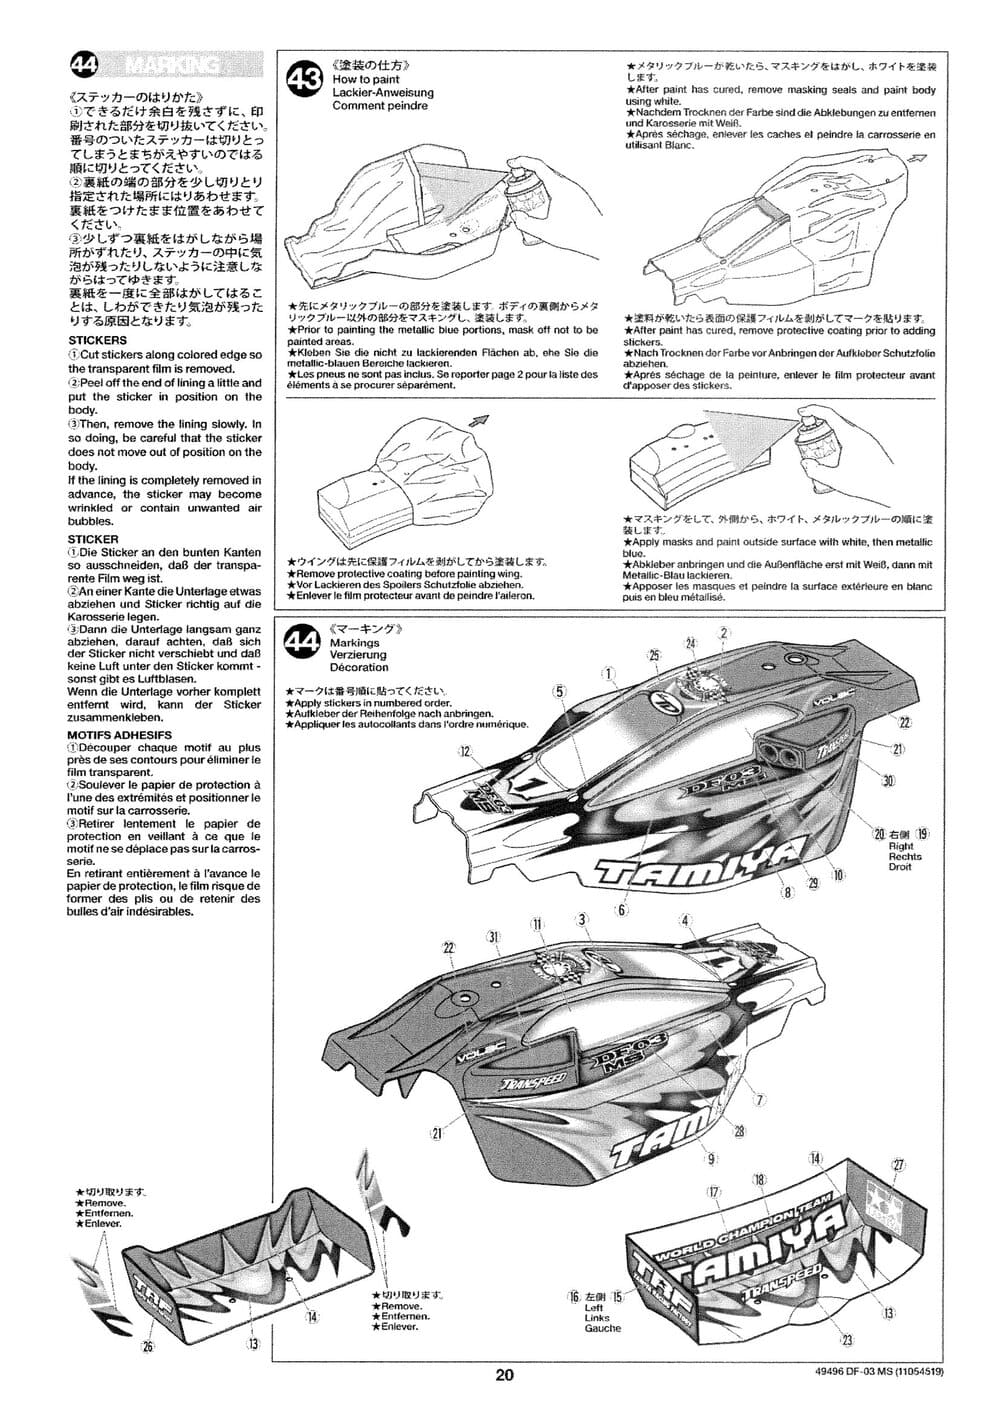 Tamiya - DF-03 MS Chassis Chassis - Manual - Page 20